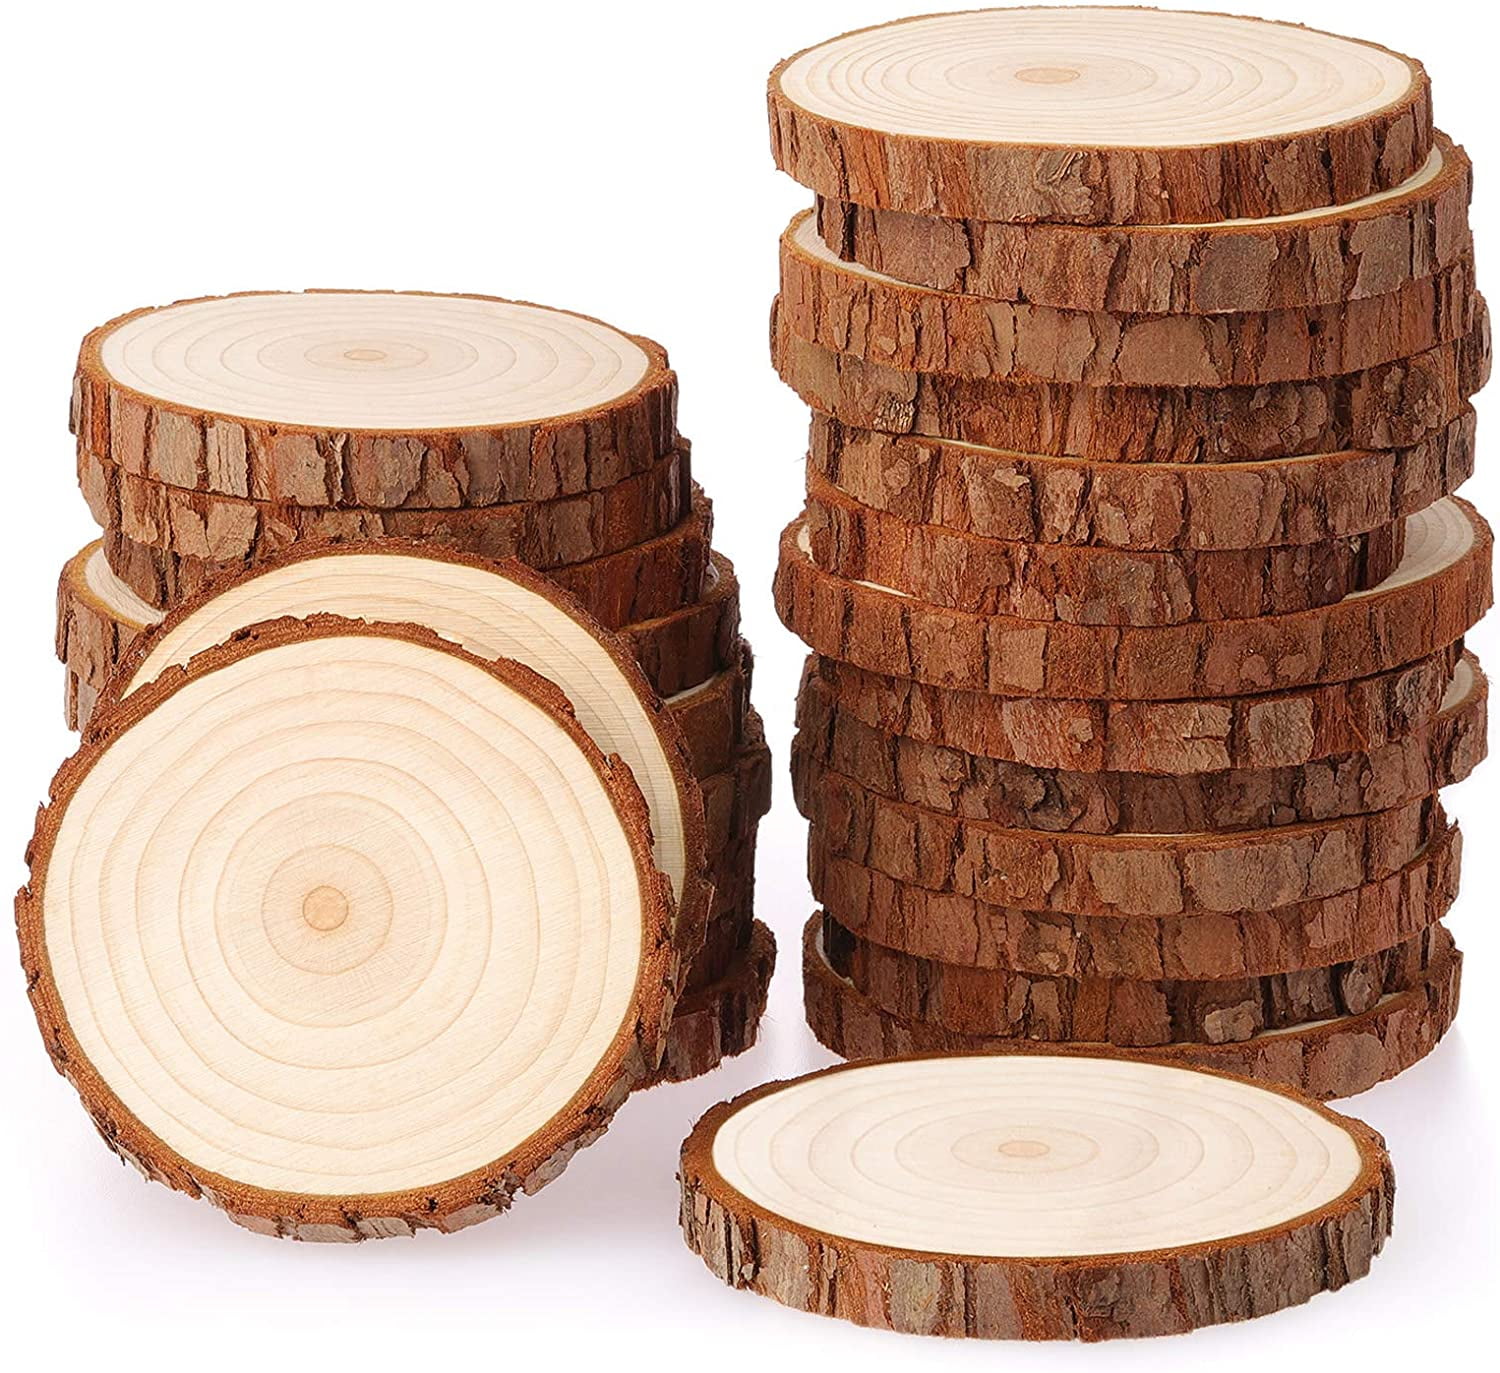 LRAERZ Natural Wood Slices 20Pcs 3.5-4.0 in Unfinished Wood Kit